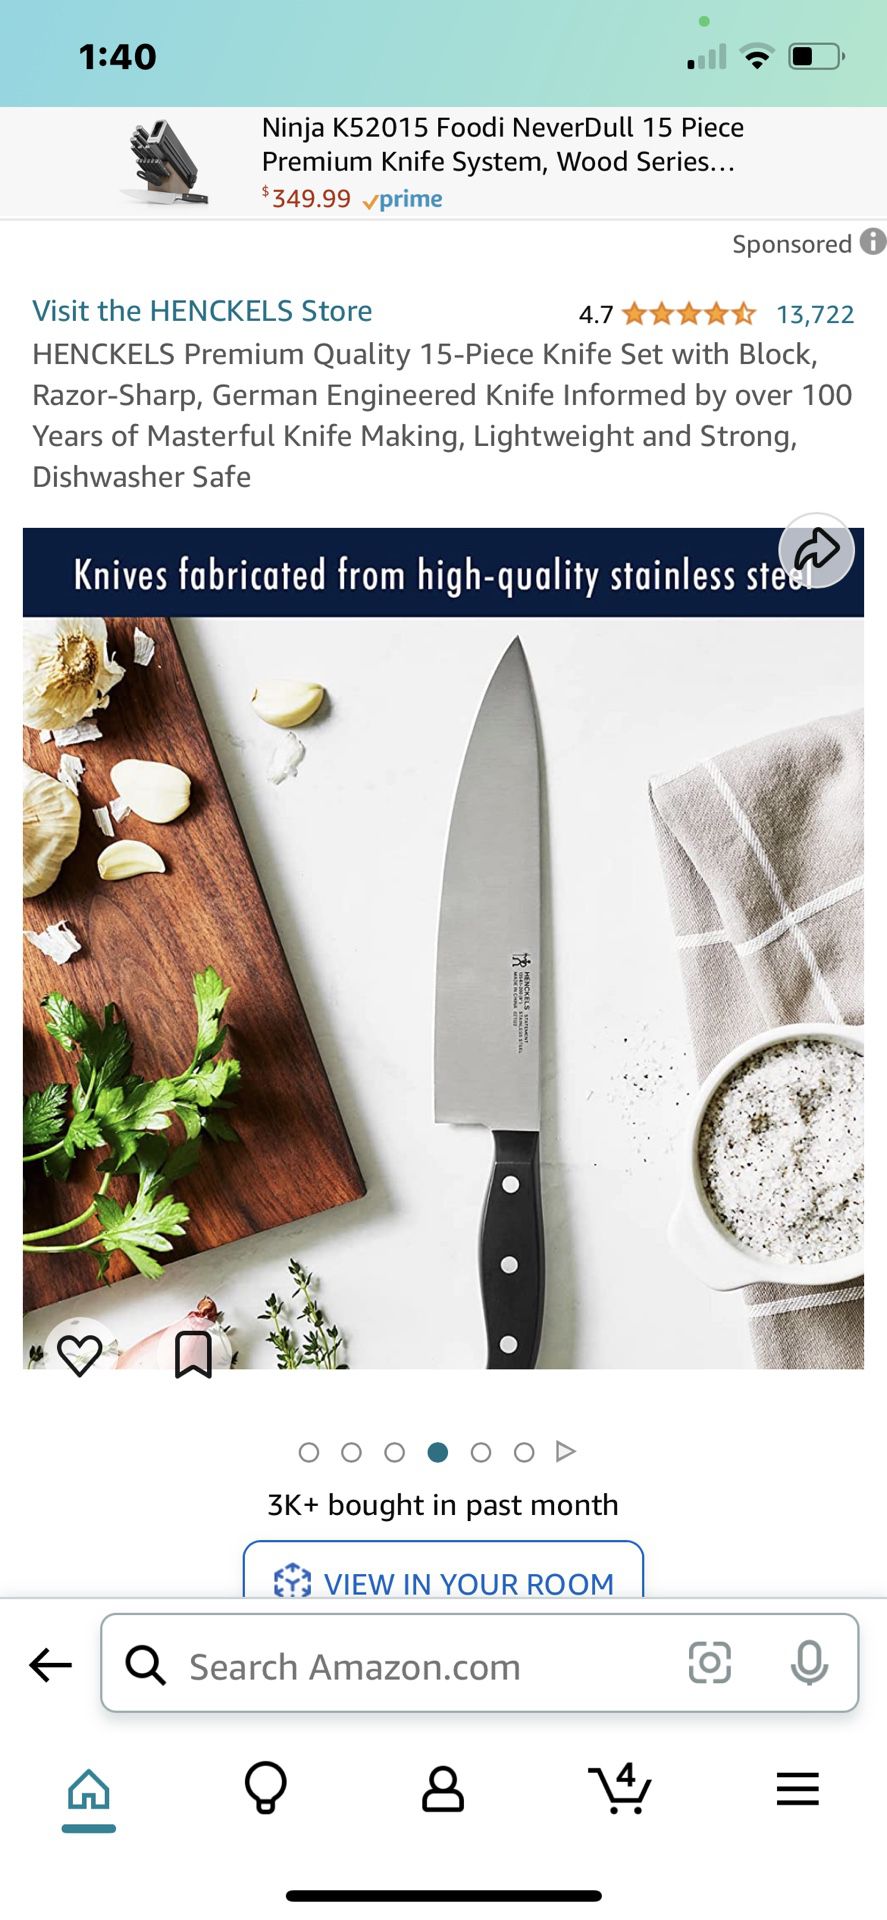 NINJA K52015 Foodi NeverDull Wood Series Knife User Guide